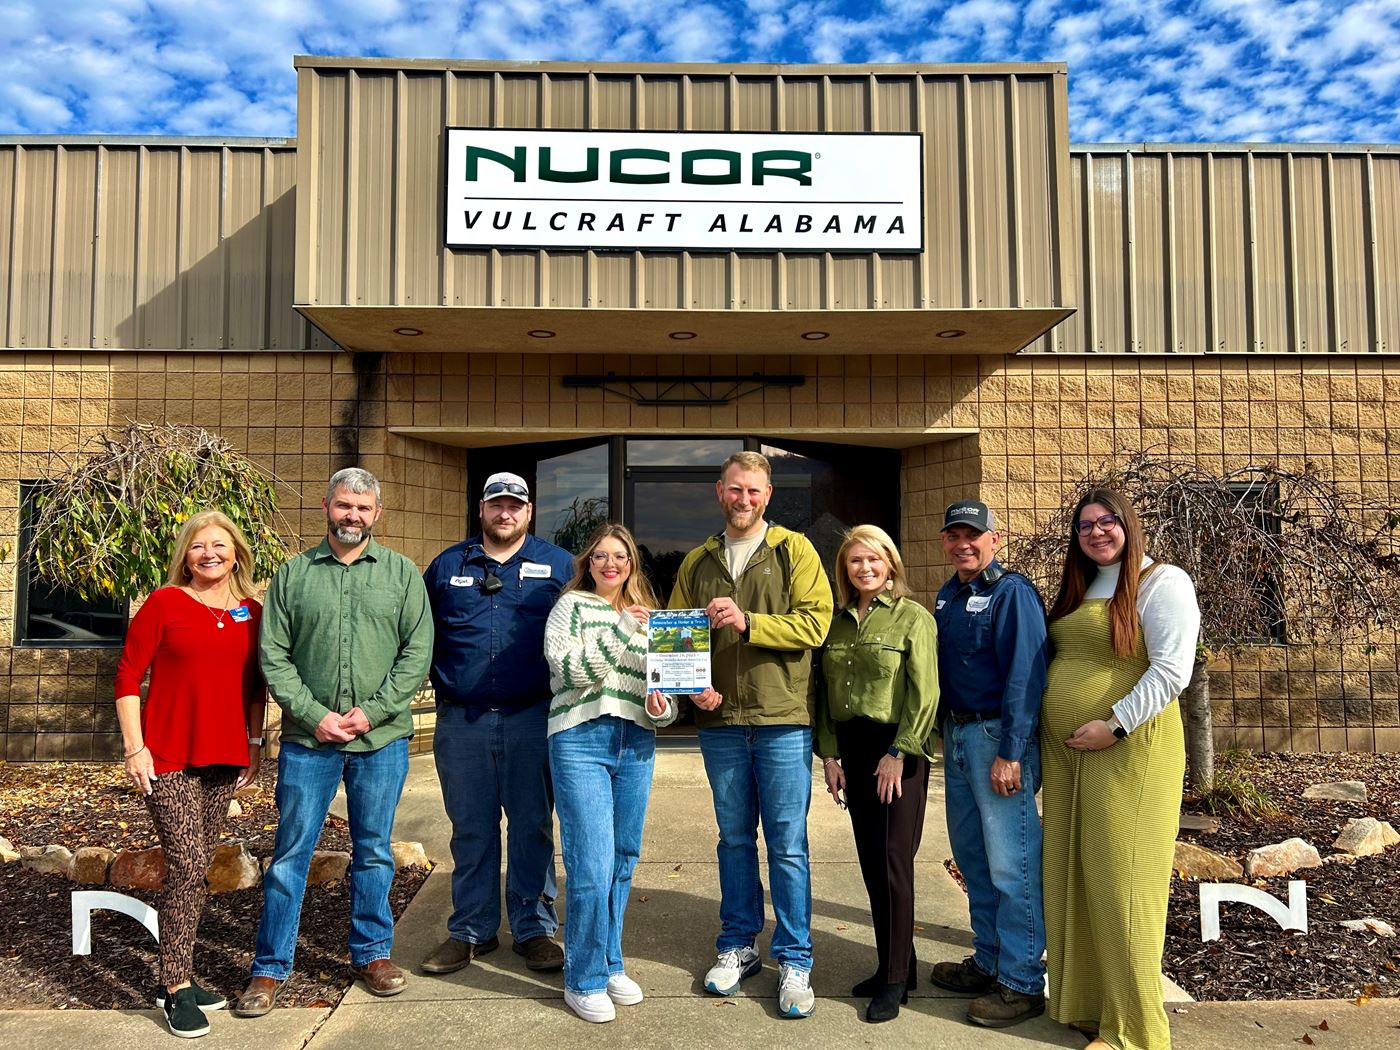 Nucor-Vulcraft Alabama presents a Corporate Wreath Sponsorship to HWA members